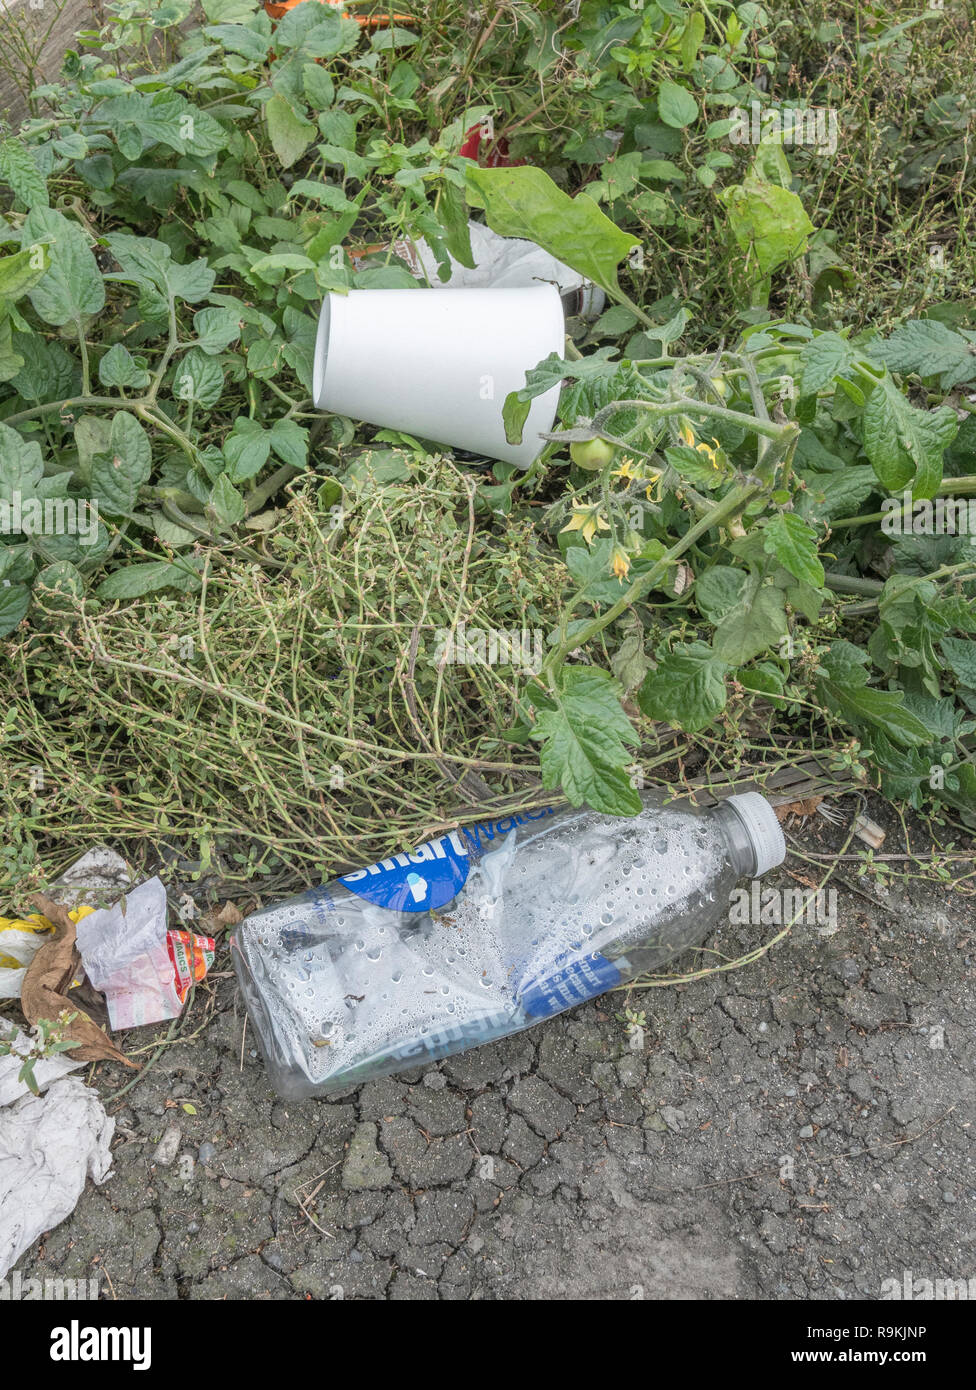 Polystyrene & plastic rubbish discarded in grassy urban back street. Metaphor plastic pollution, environmental pollution, war on plastic waste. Stock Photo